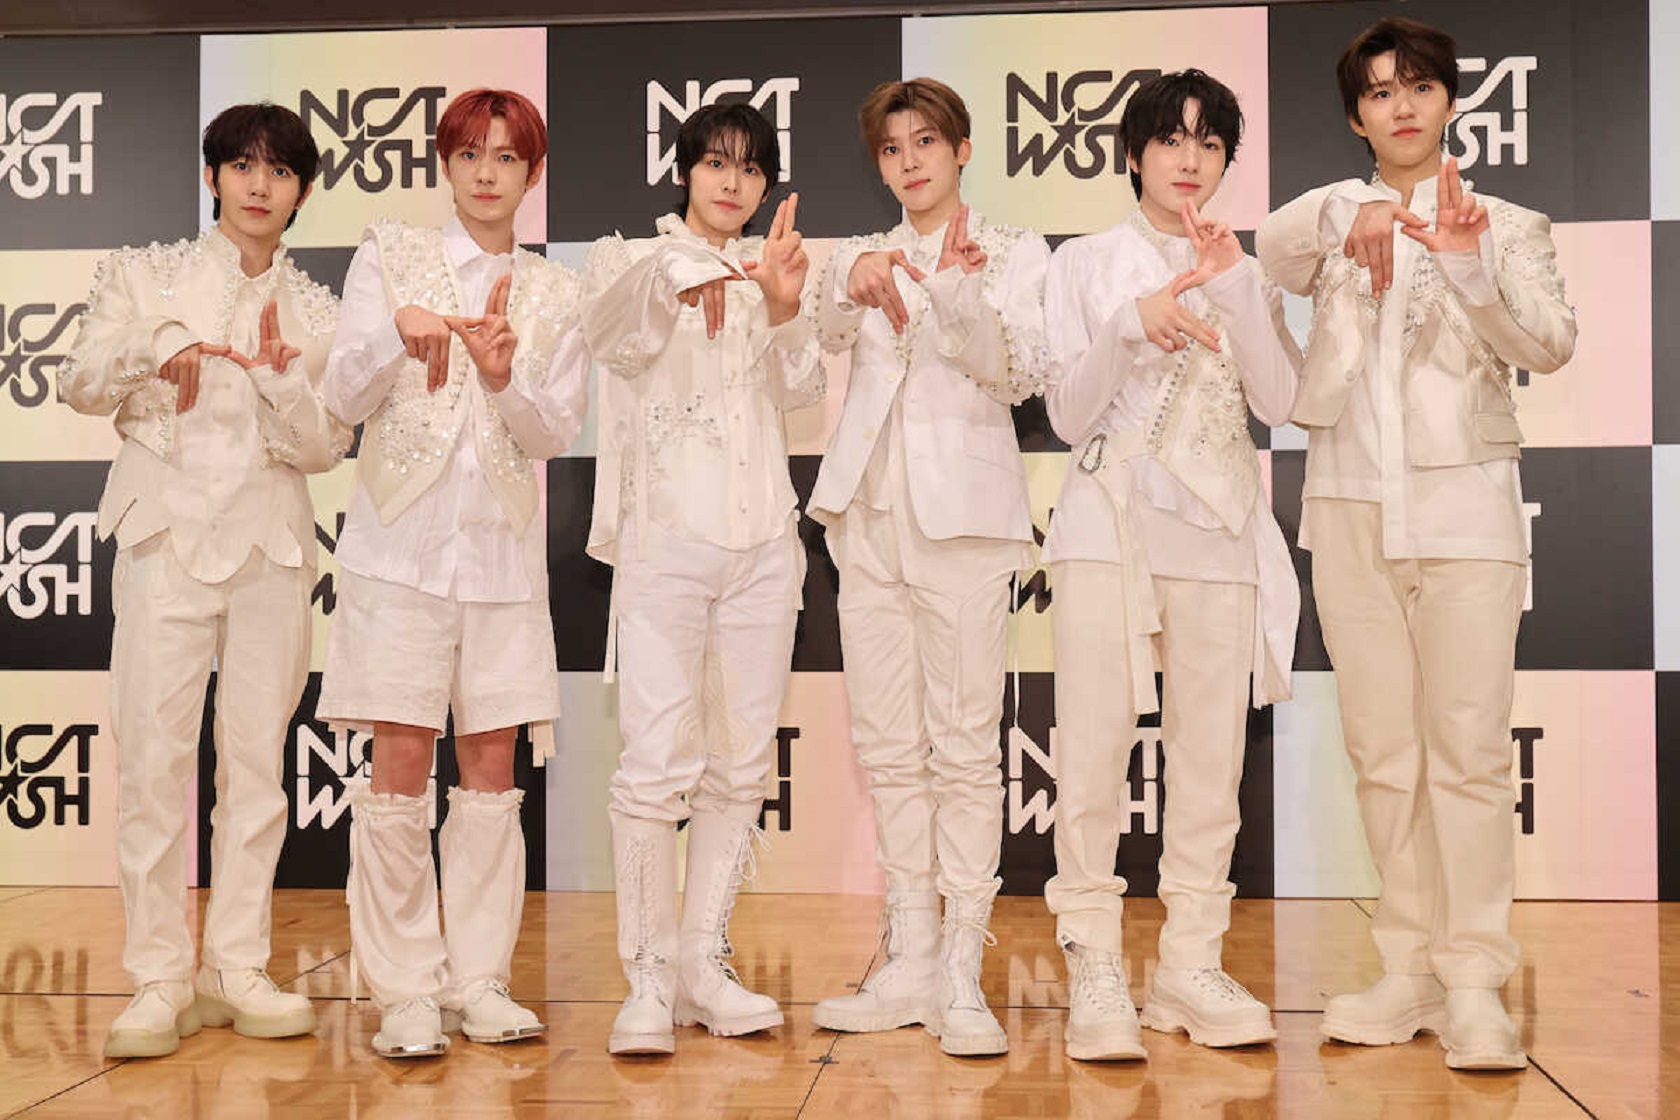 NCT WISH 3月3日深夜のテレ東音楽特番「超音波#」に出演決定!この日限りのスペシャルメドレー披露予定